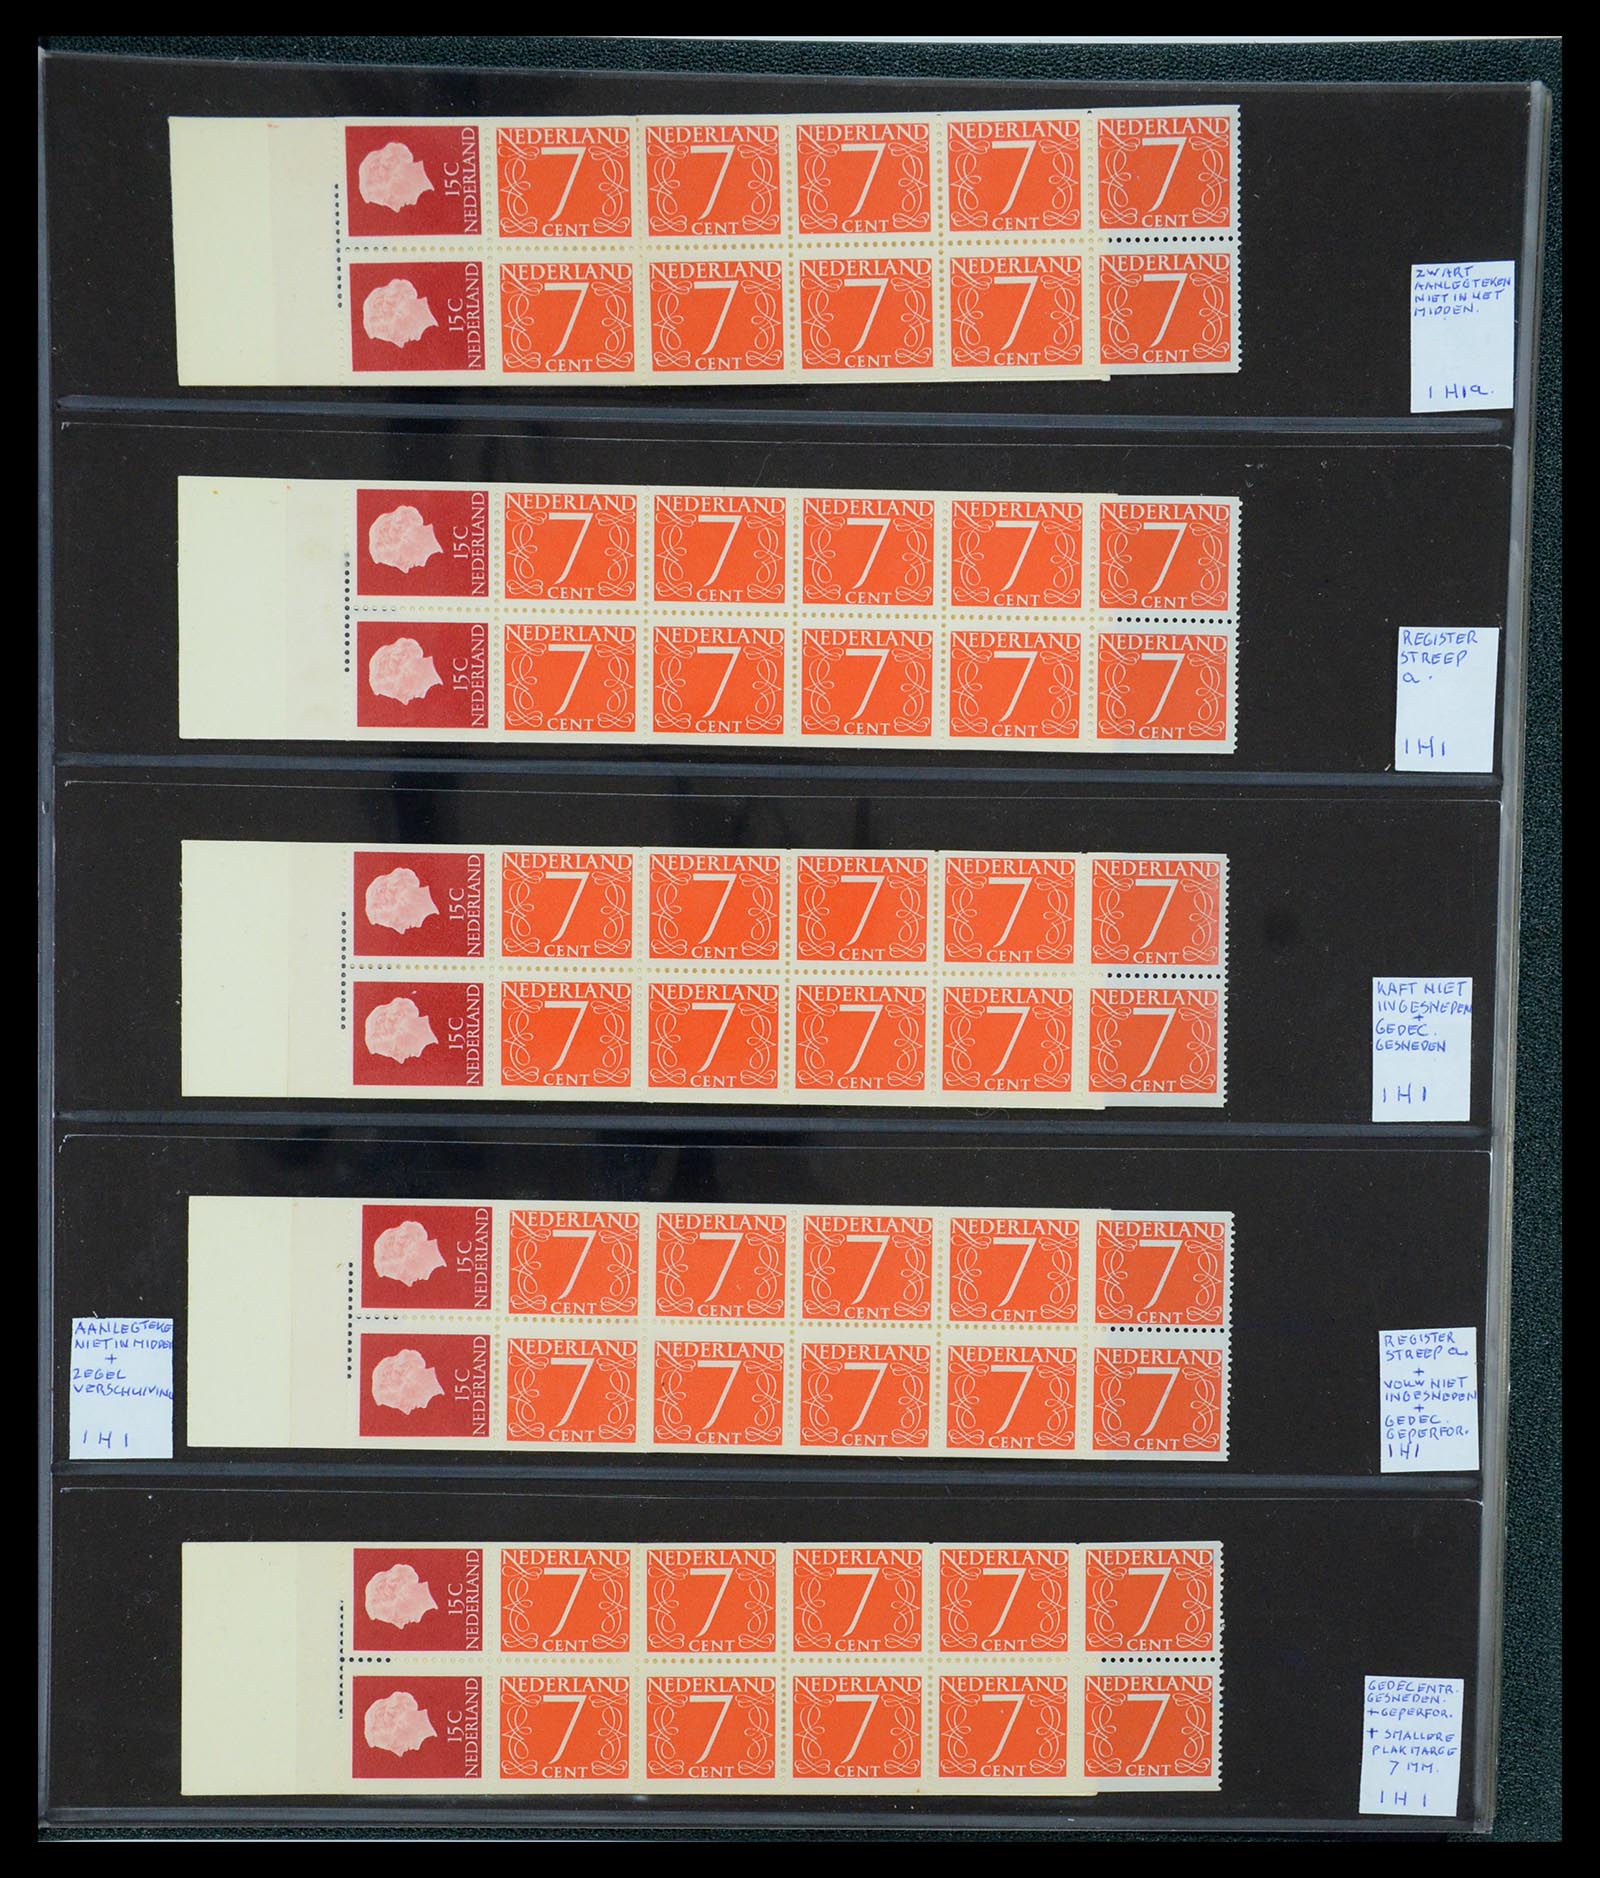 35705 003 - Stamp Collection 35705 Netherlands stamp booklets 1964-2000.